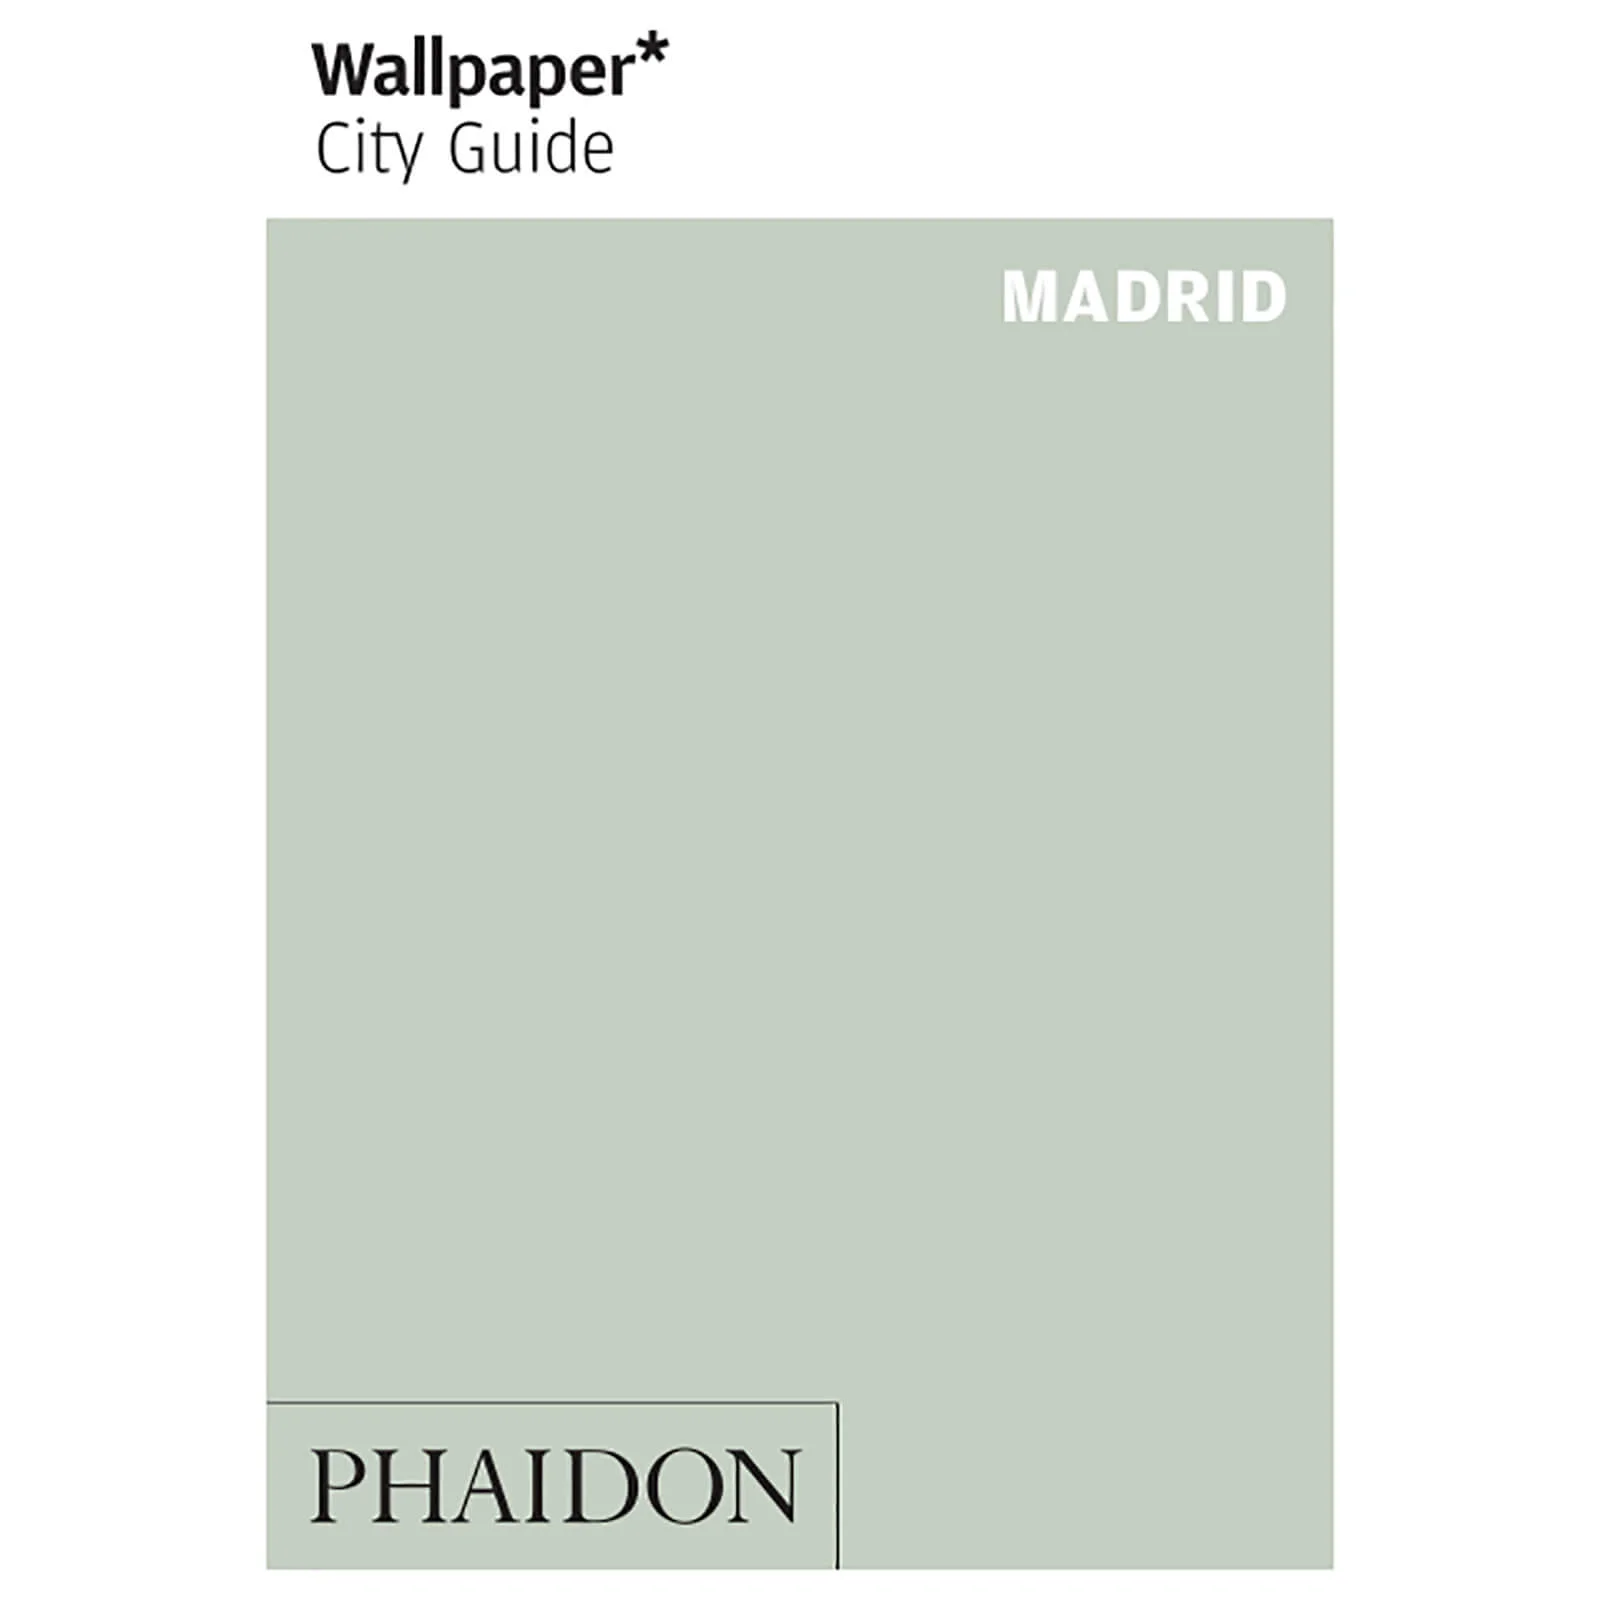 Phaidon: Wallpaper* City Guide - Madrid Image 1